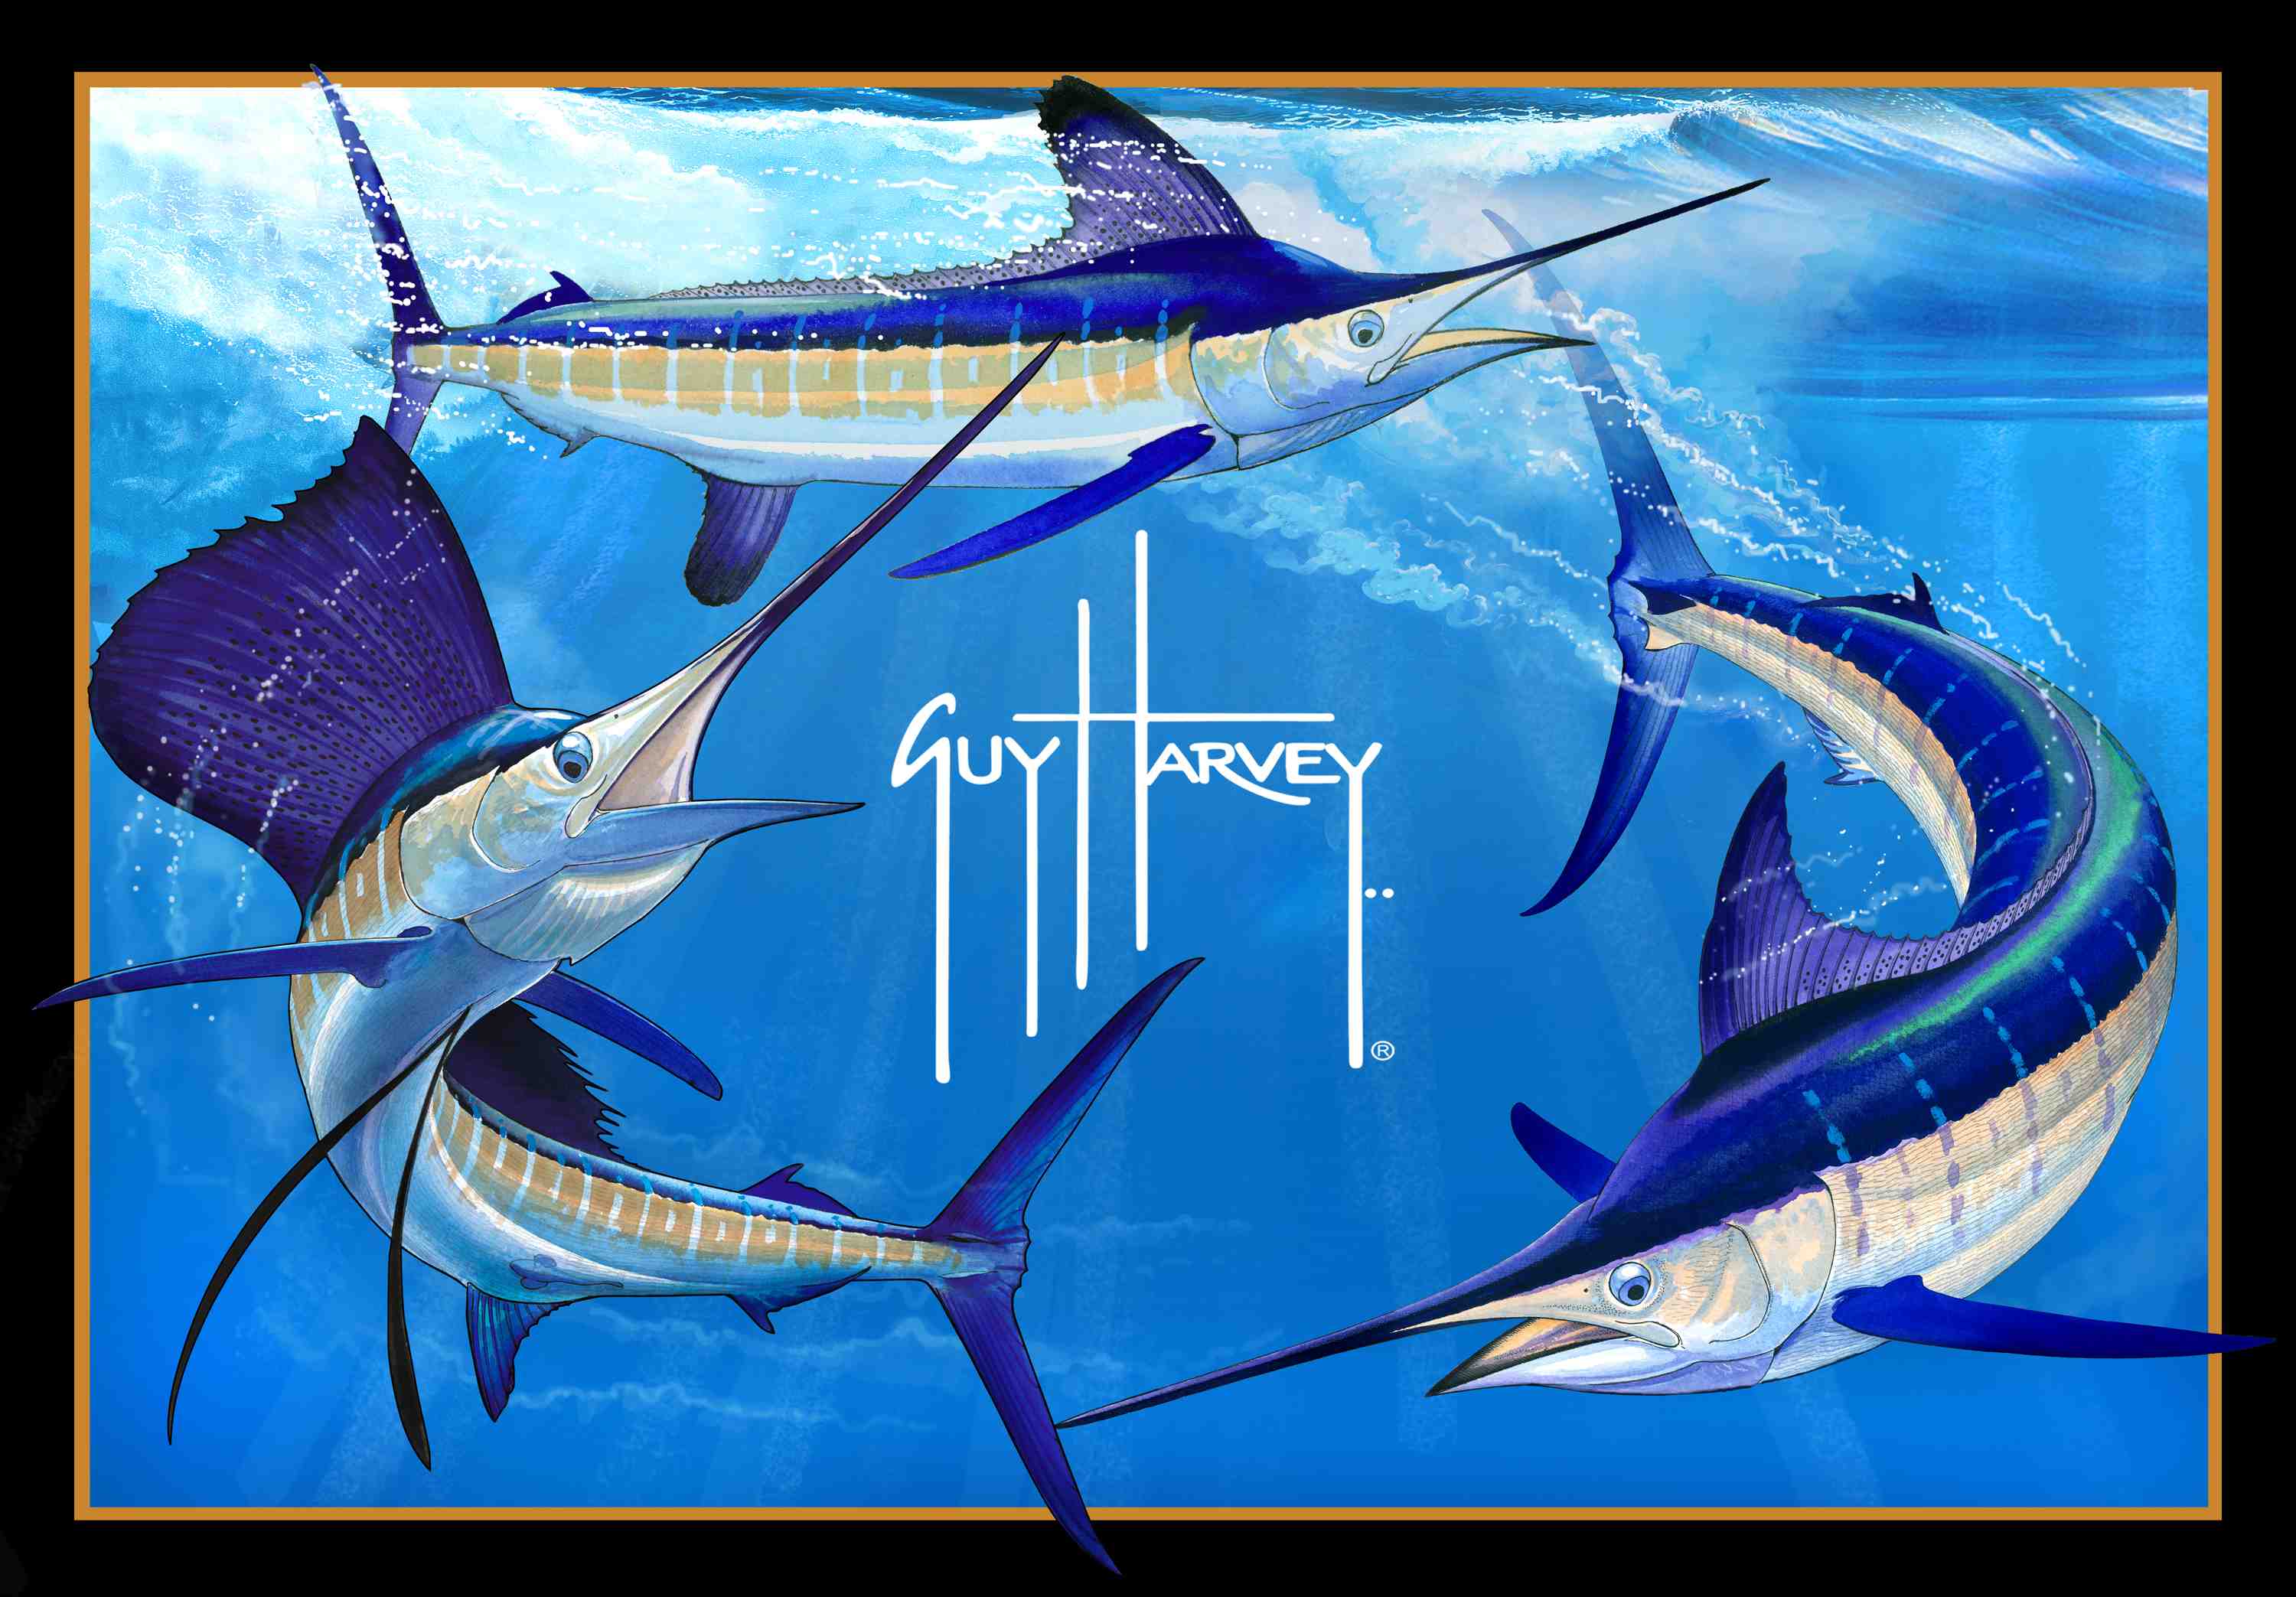 guy harvey fond d'écran,espadon,voilier,marlin bleu atlantique,marlin,poisson